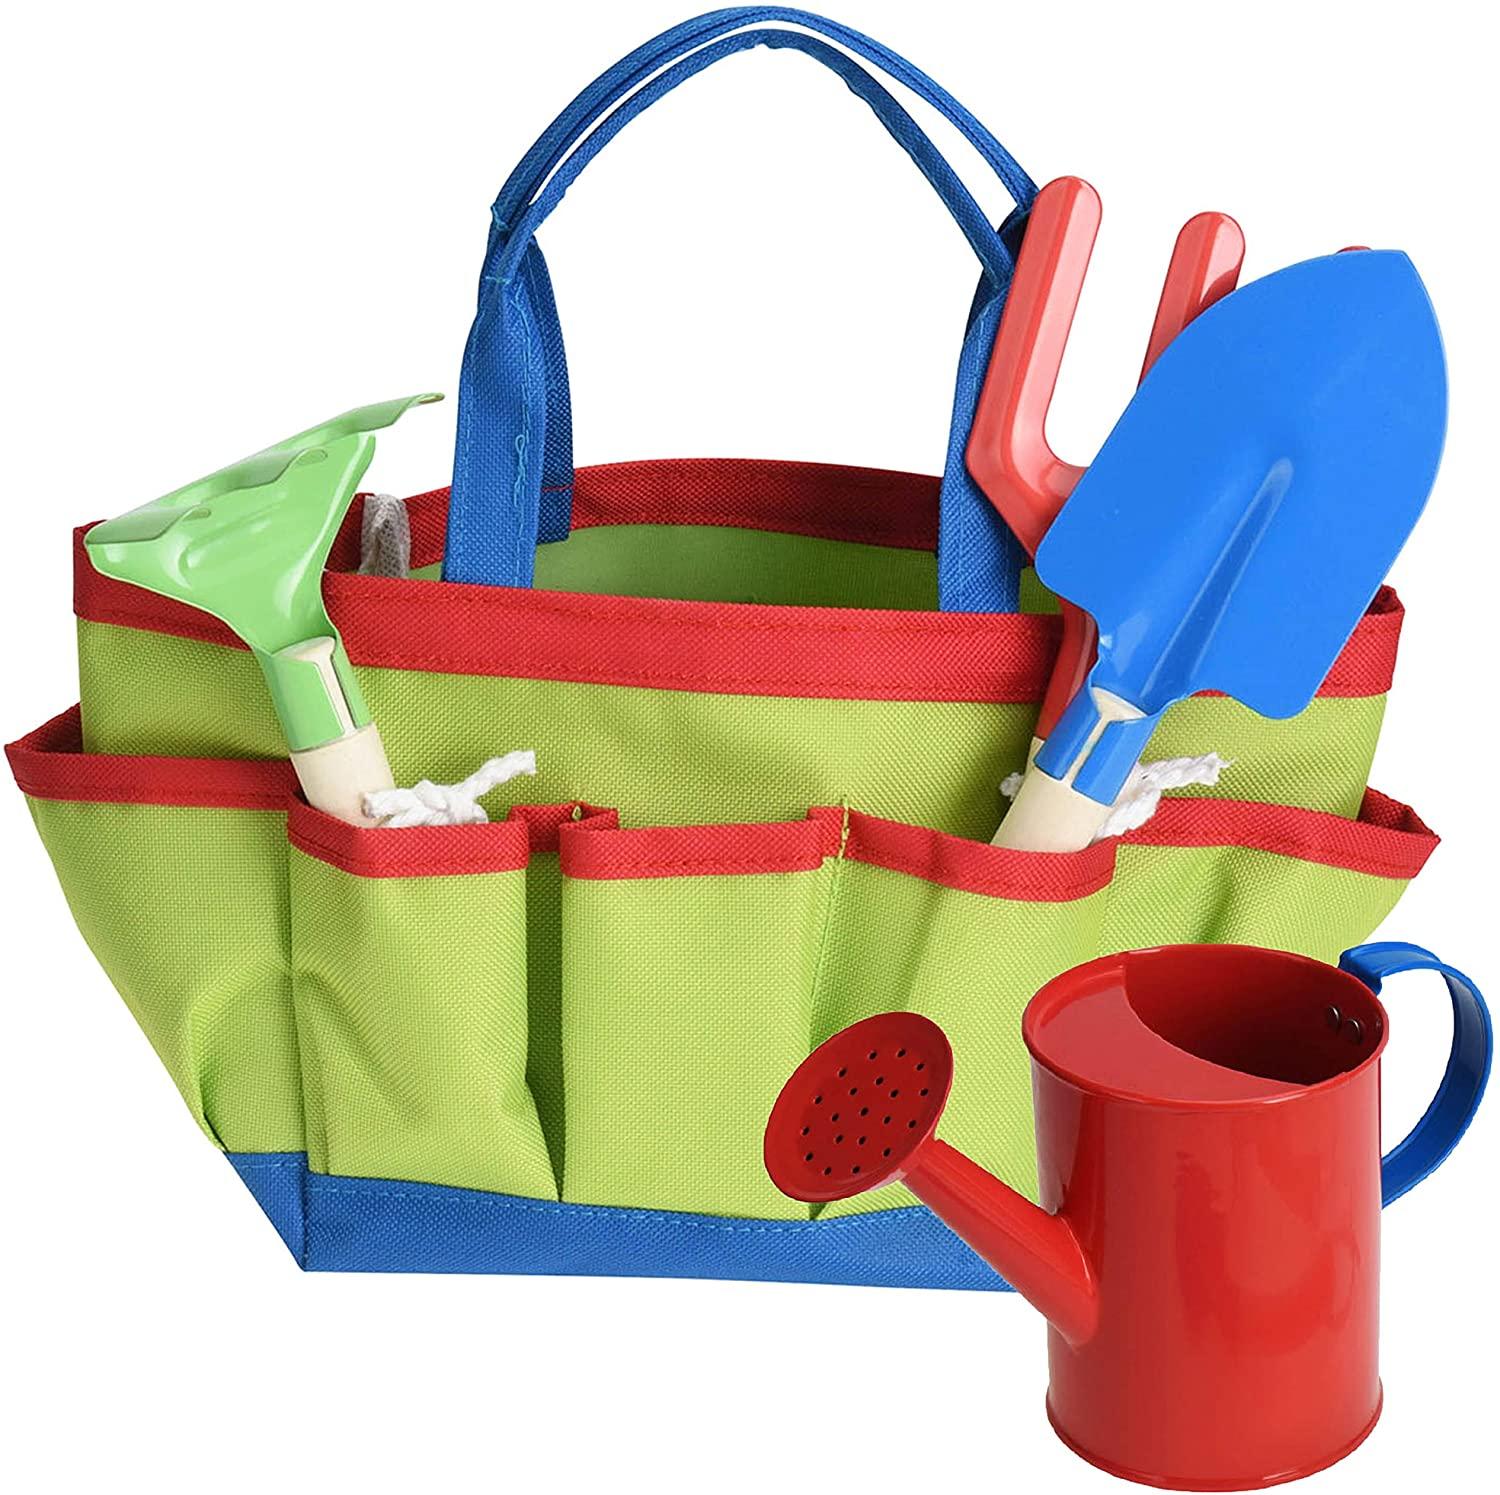 Green gardening set & bag, red trim, blue base. Red water can, blue spade, green fork in bag.